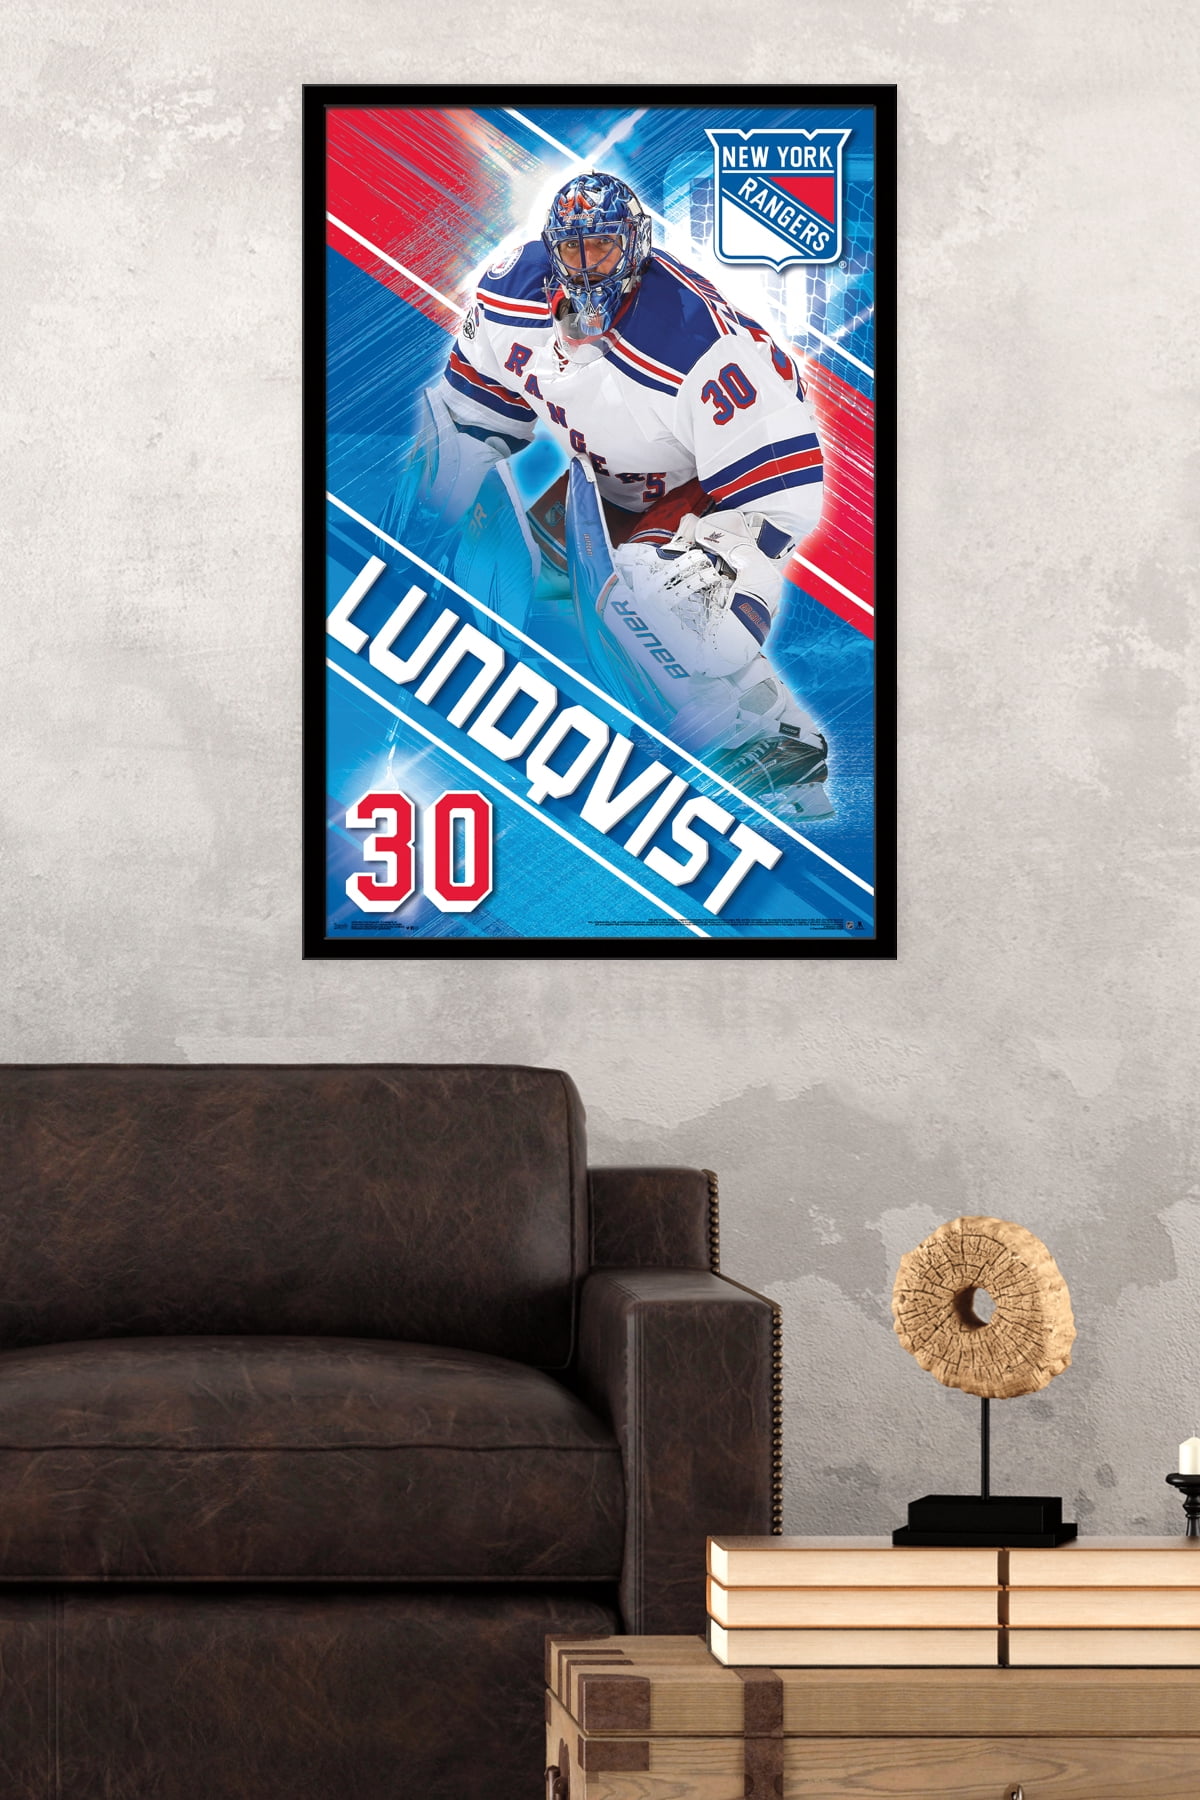 Lids Henrik Lundqvist New York Rangers Fanatics Authentic Framed